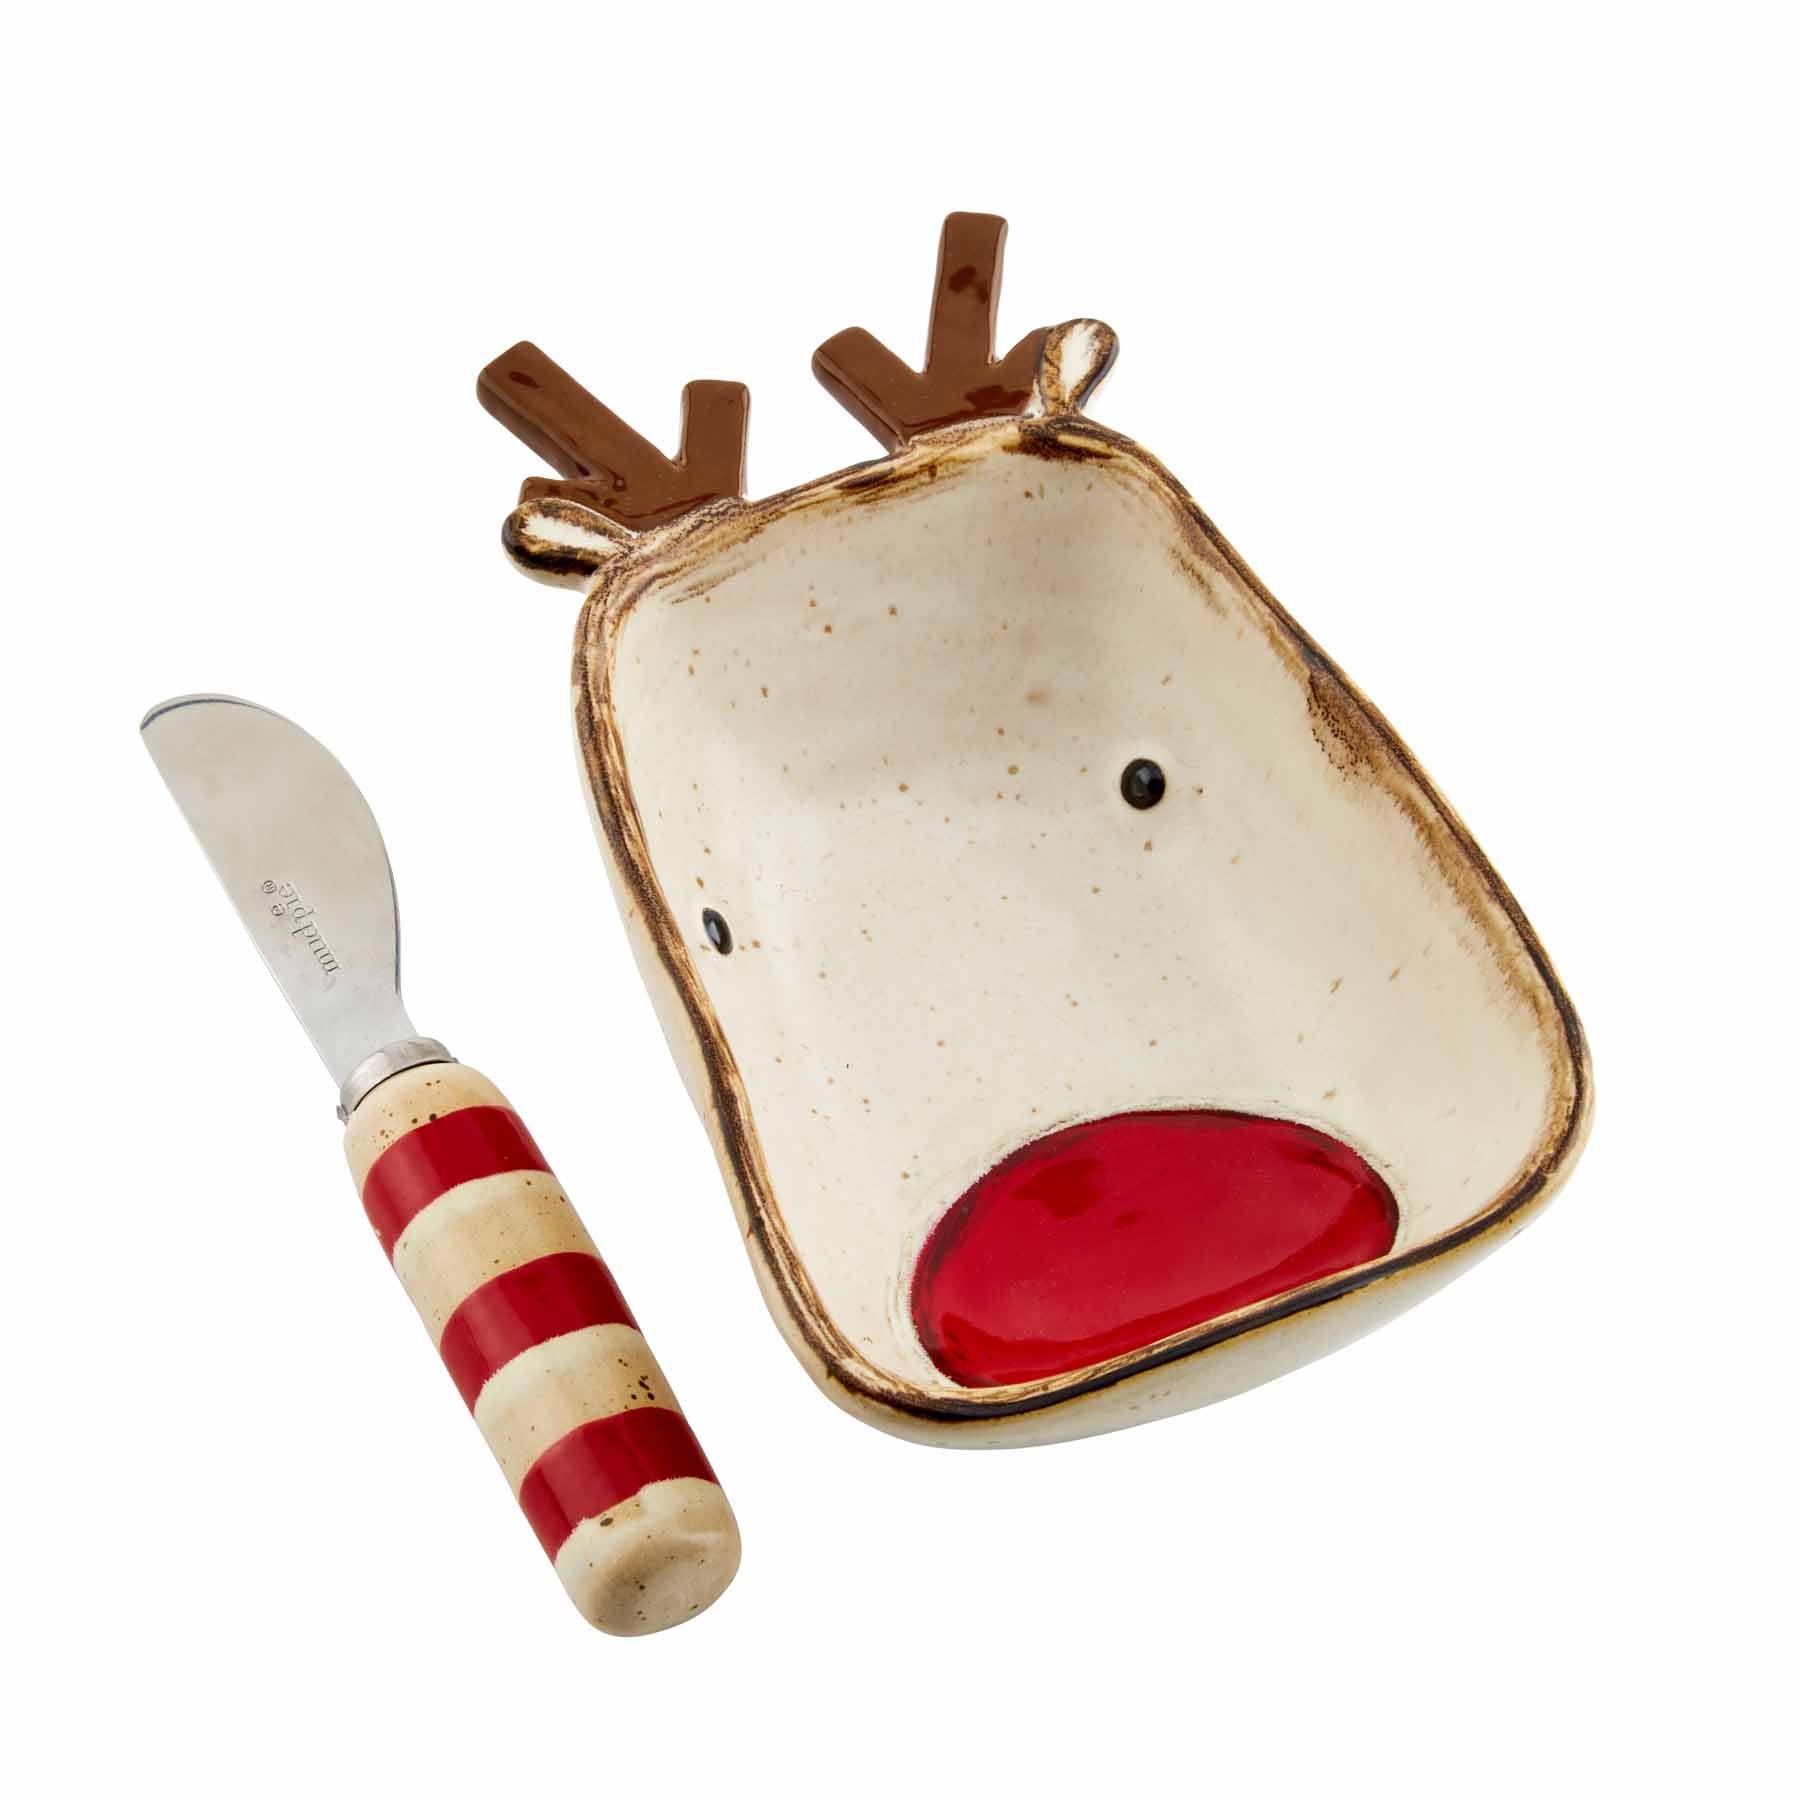 Mud Pie MP 40250139 Christmas Magnetic Salt & Pepper Shaker – Piper Lillies  Gift Shoppe